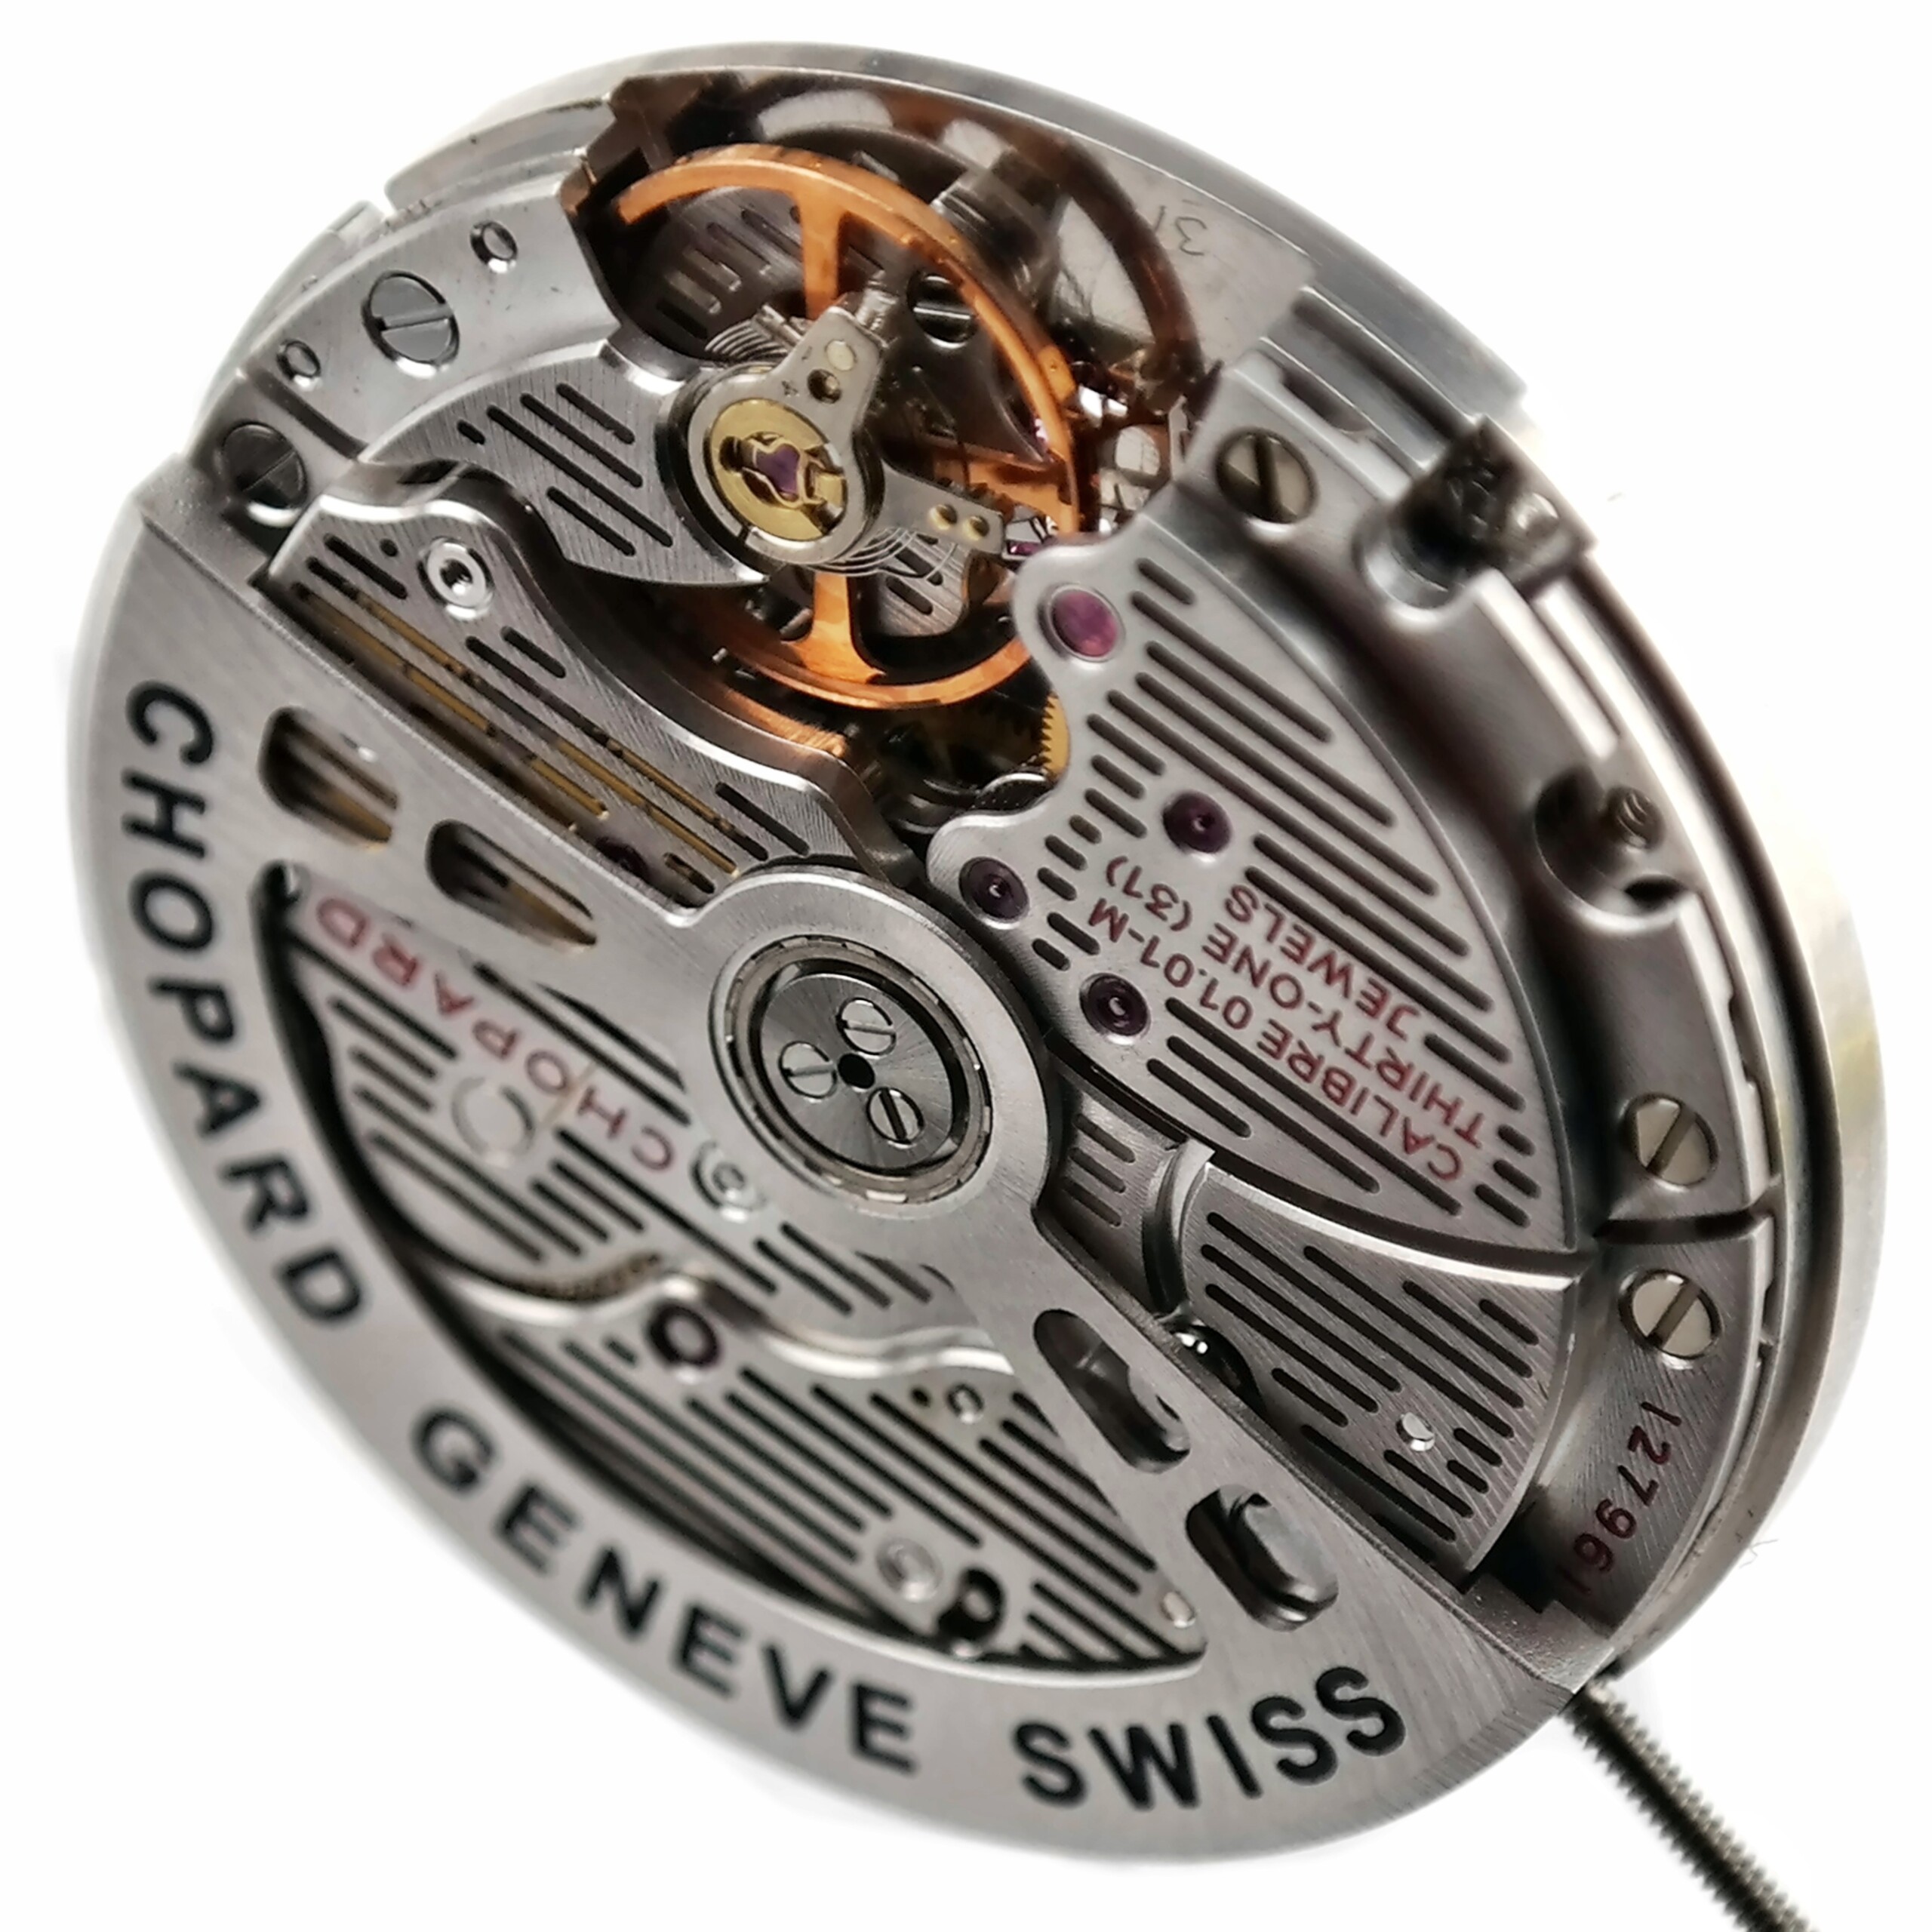 chopard automatic chronometer watch movement calibre 01.01 m